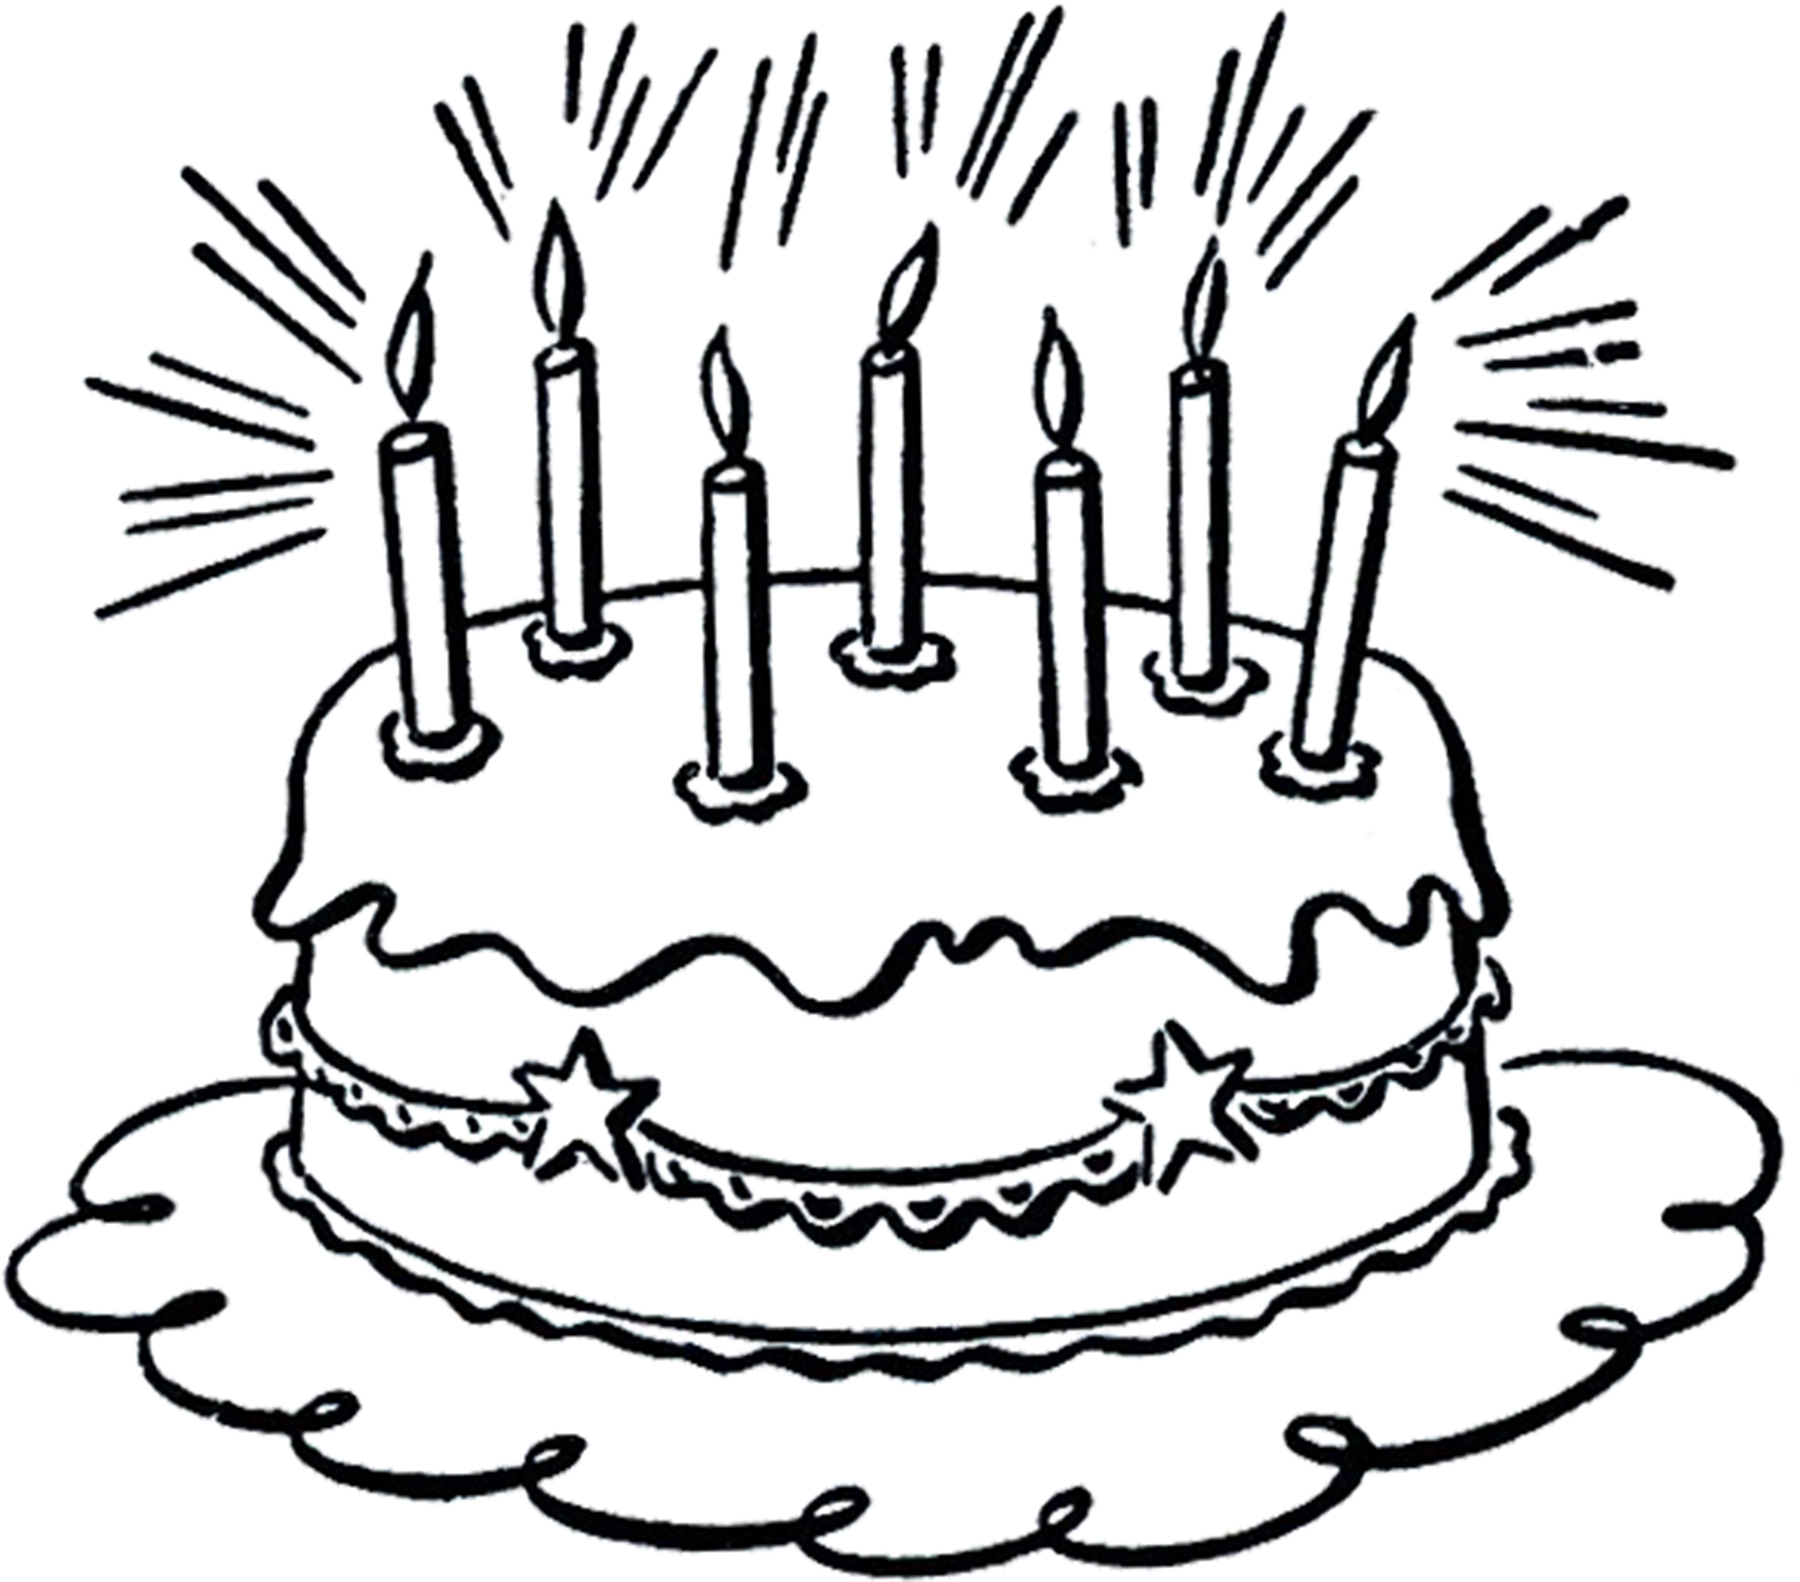 Free Birthday Cake Clip Art Black And White, Download Free